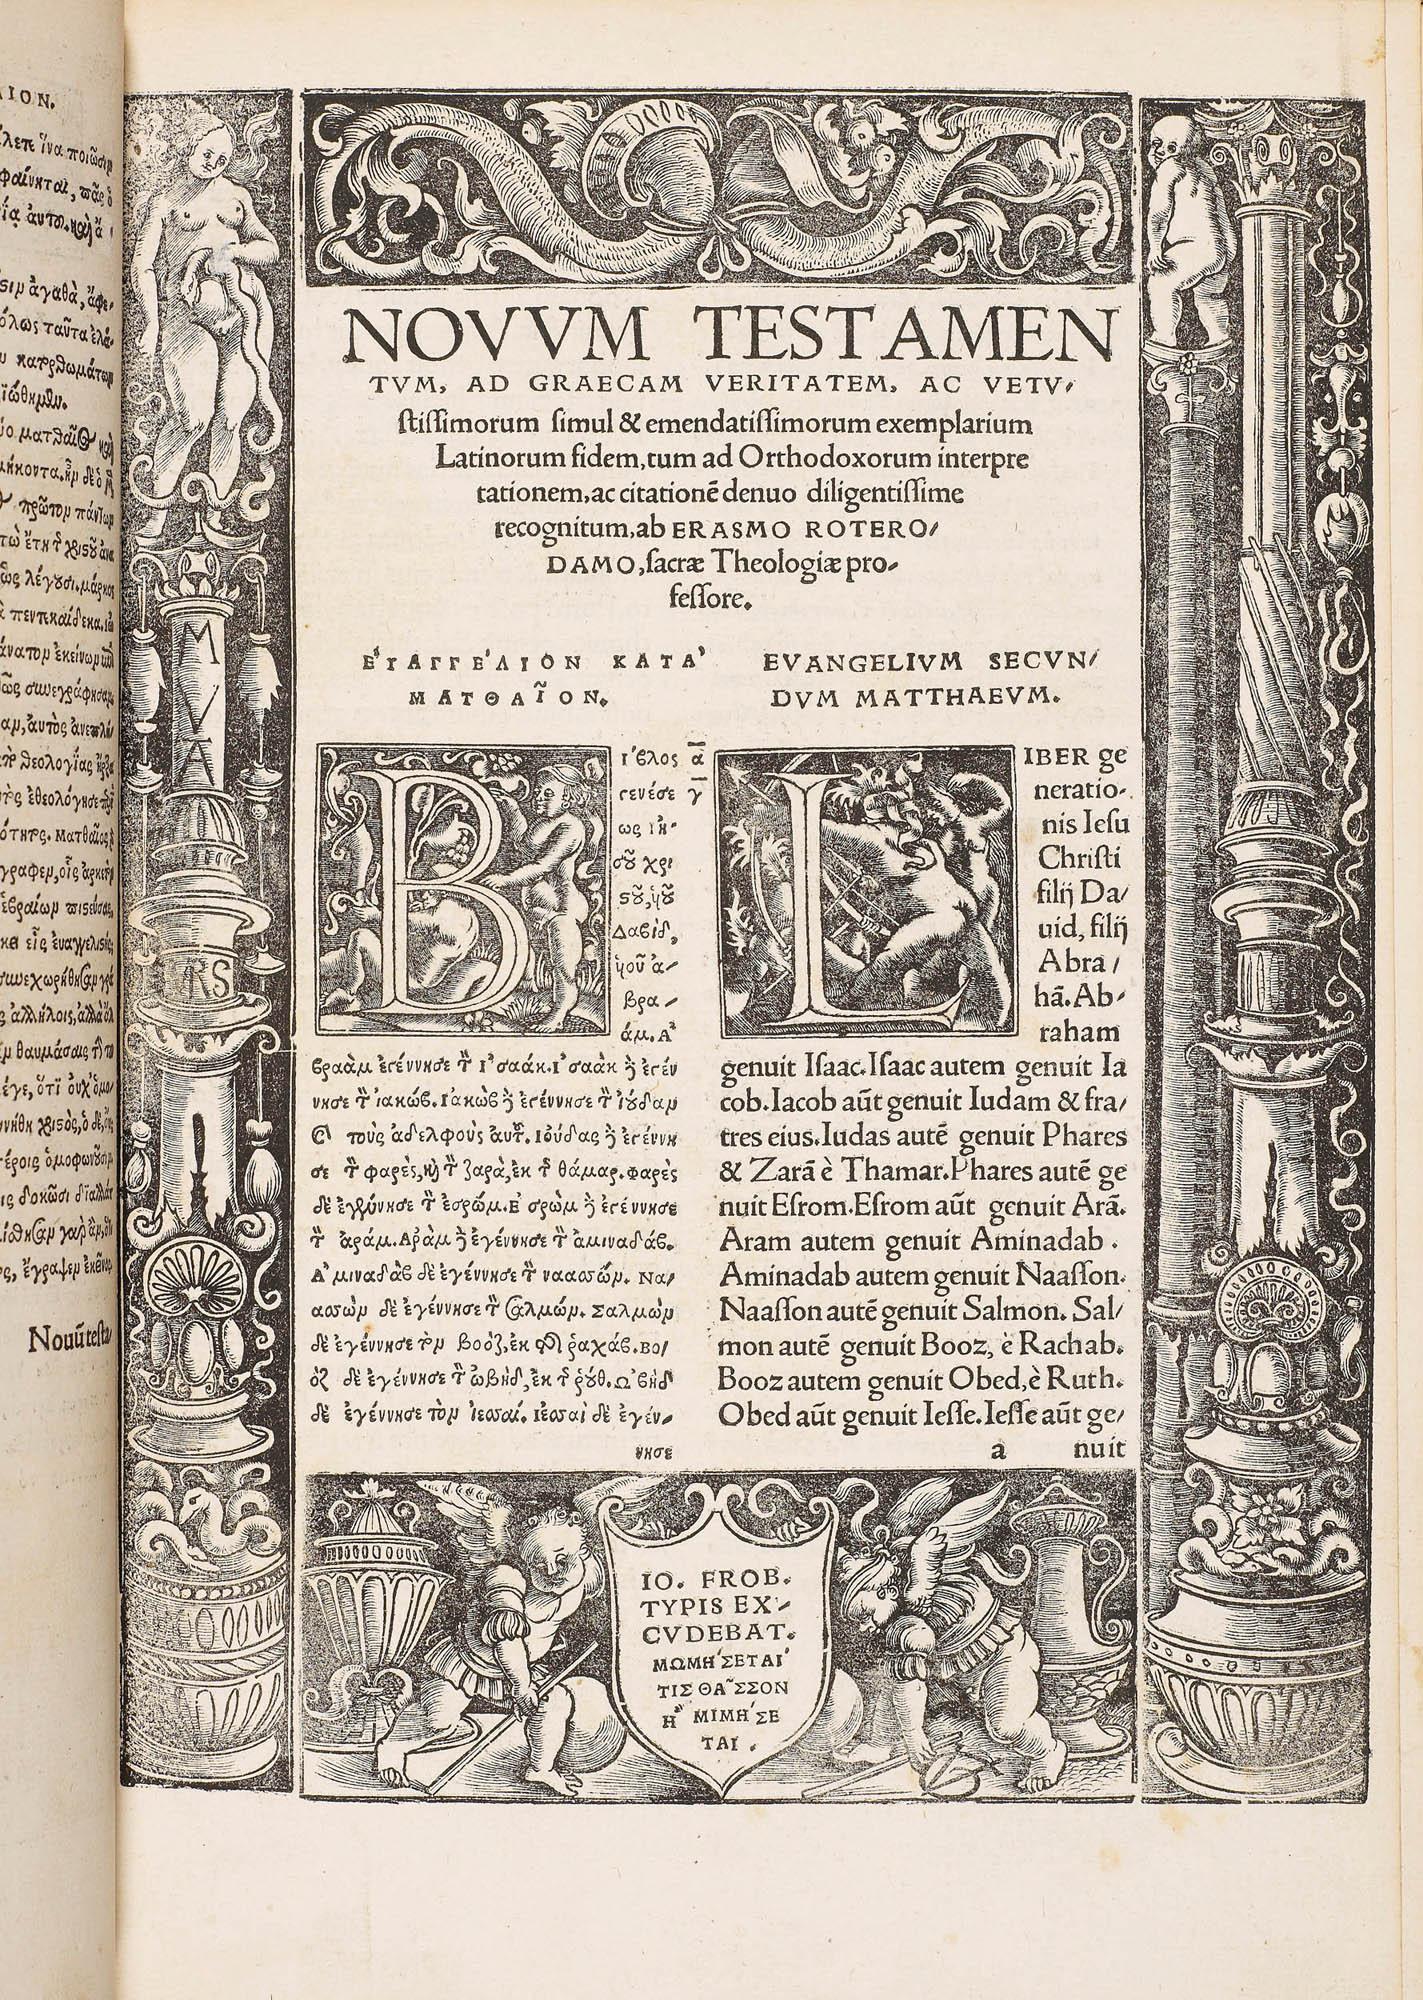 5 Novum Testamentum (Nieuwe Testament